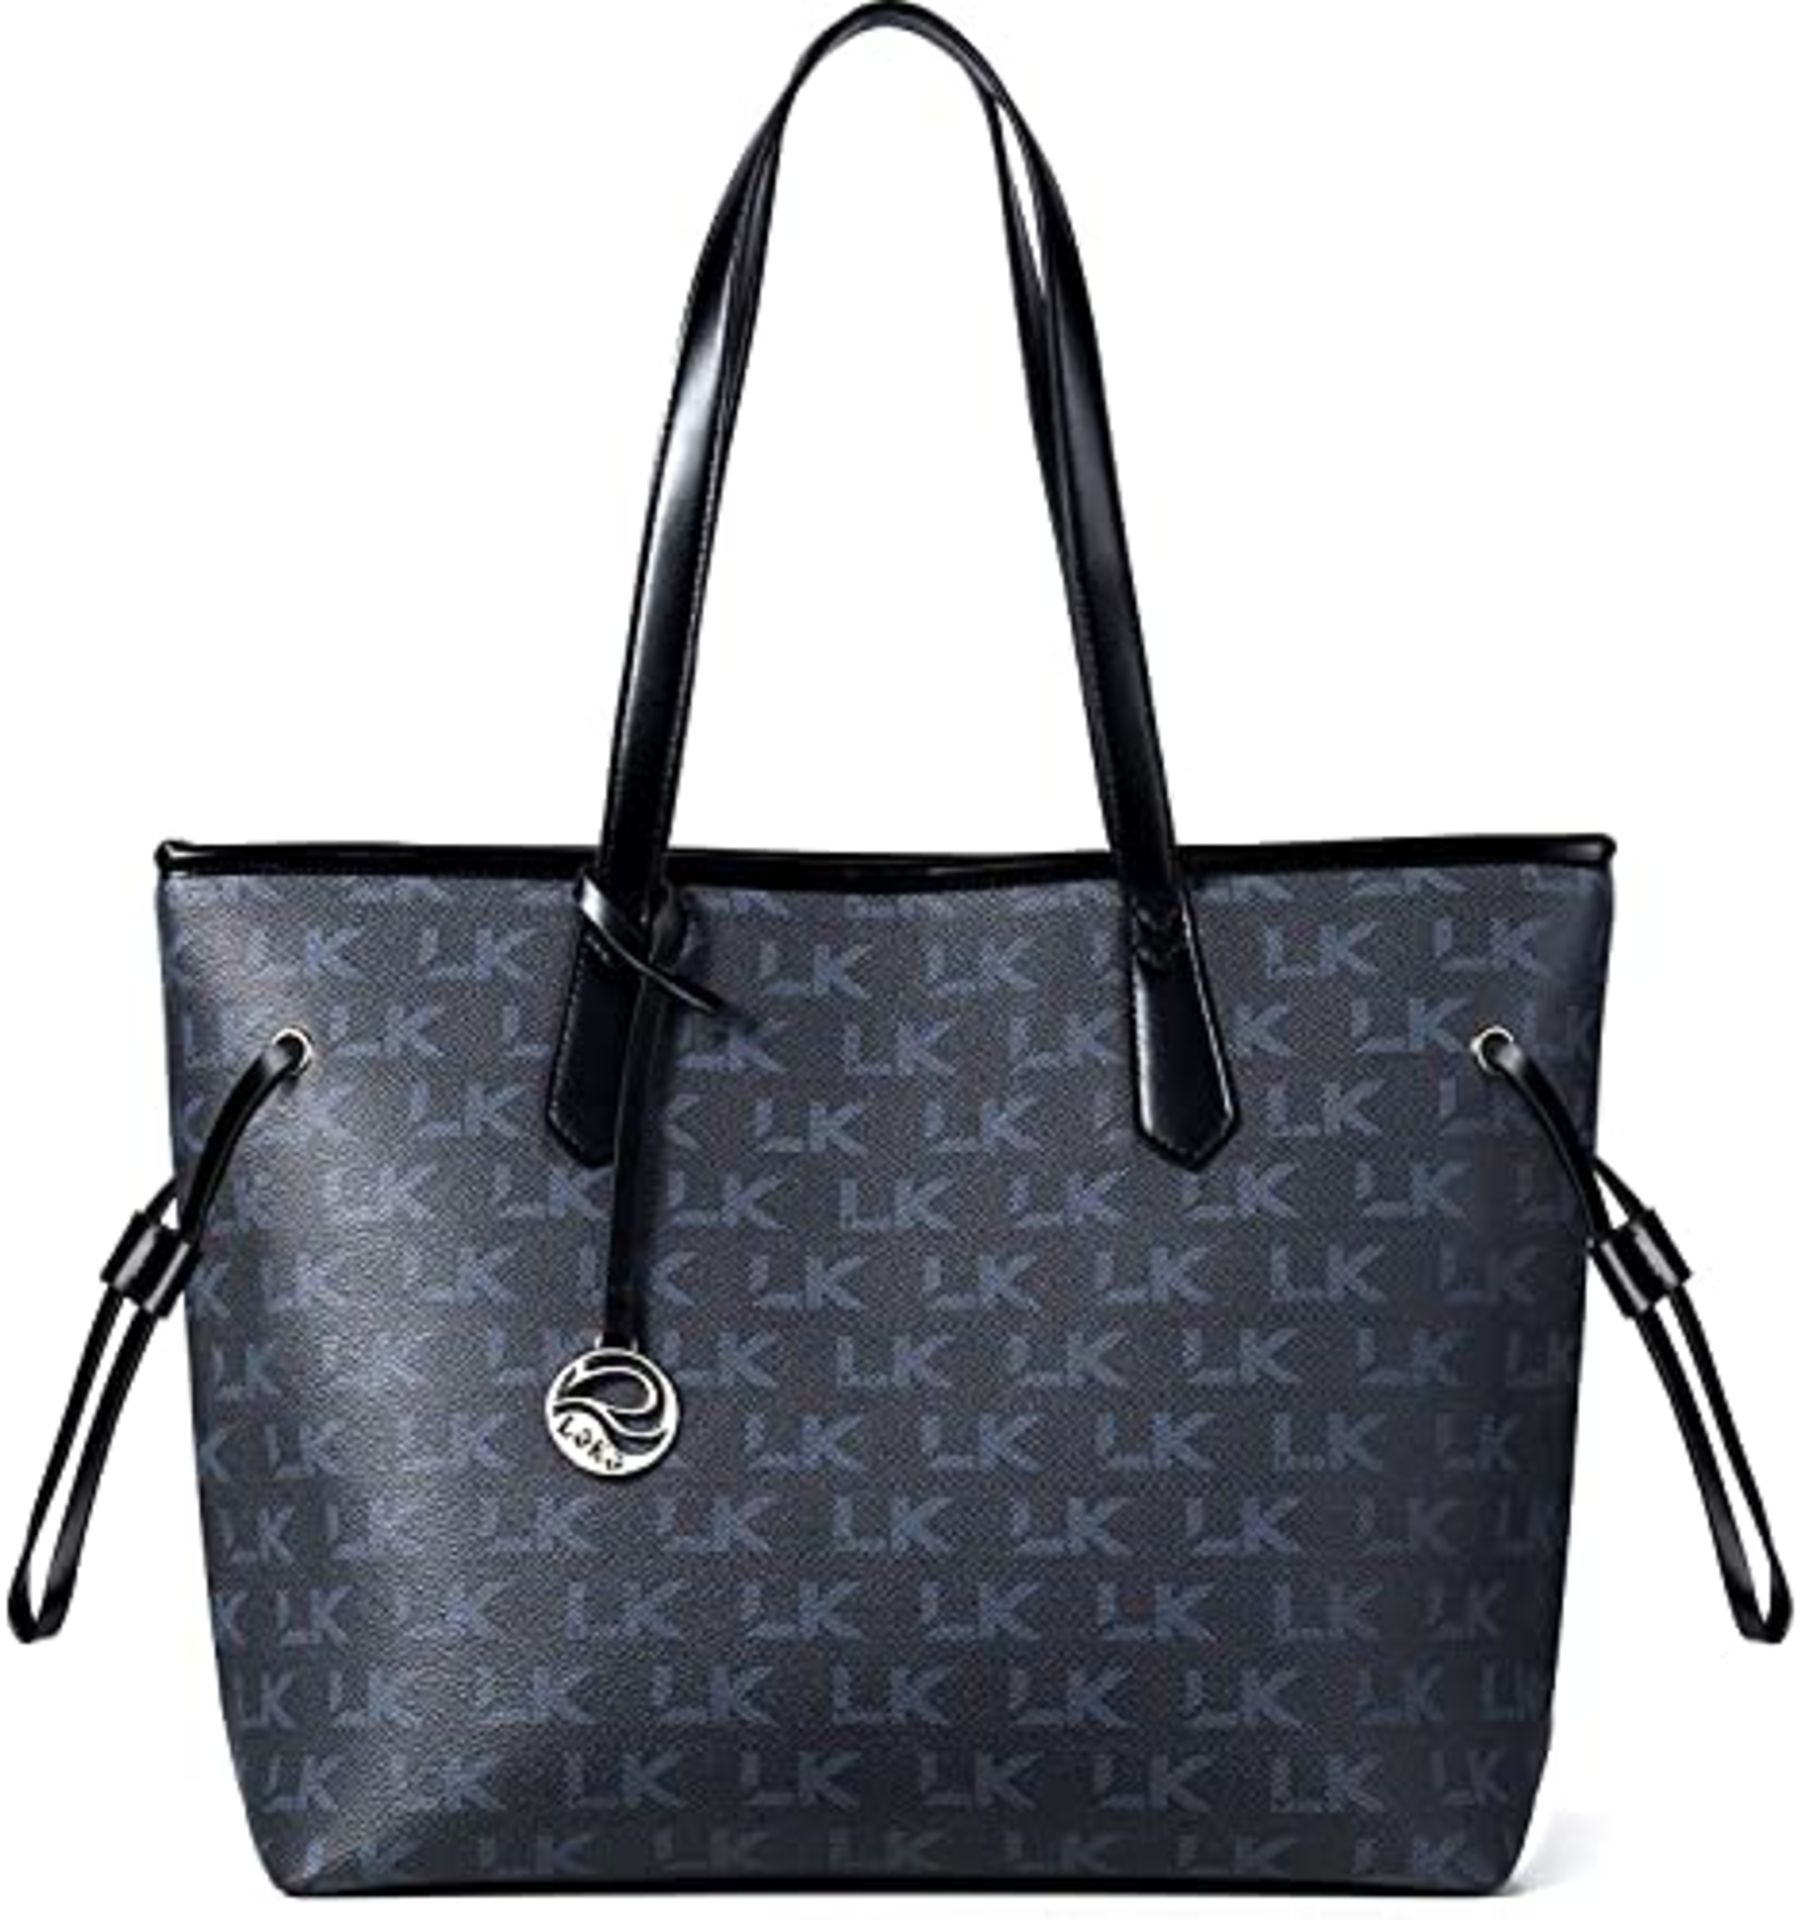 RRP £25.67 Lekesky Handbag Women Tote Leather Shoulder Bag for Work/School/Date